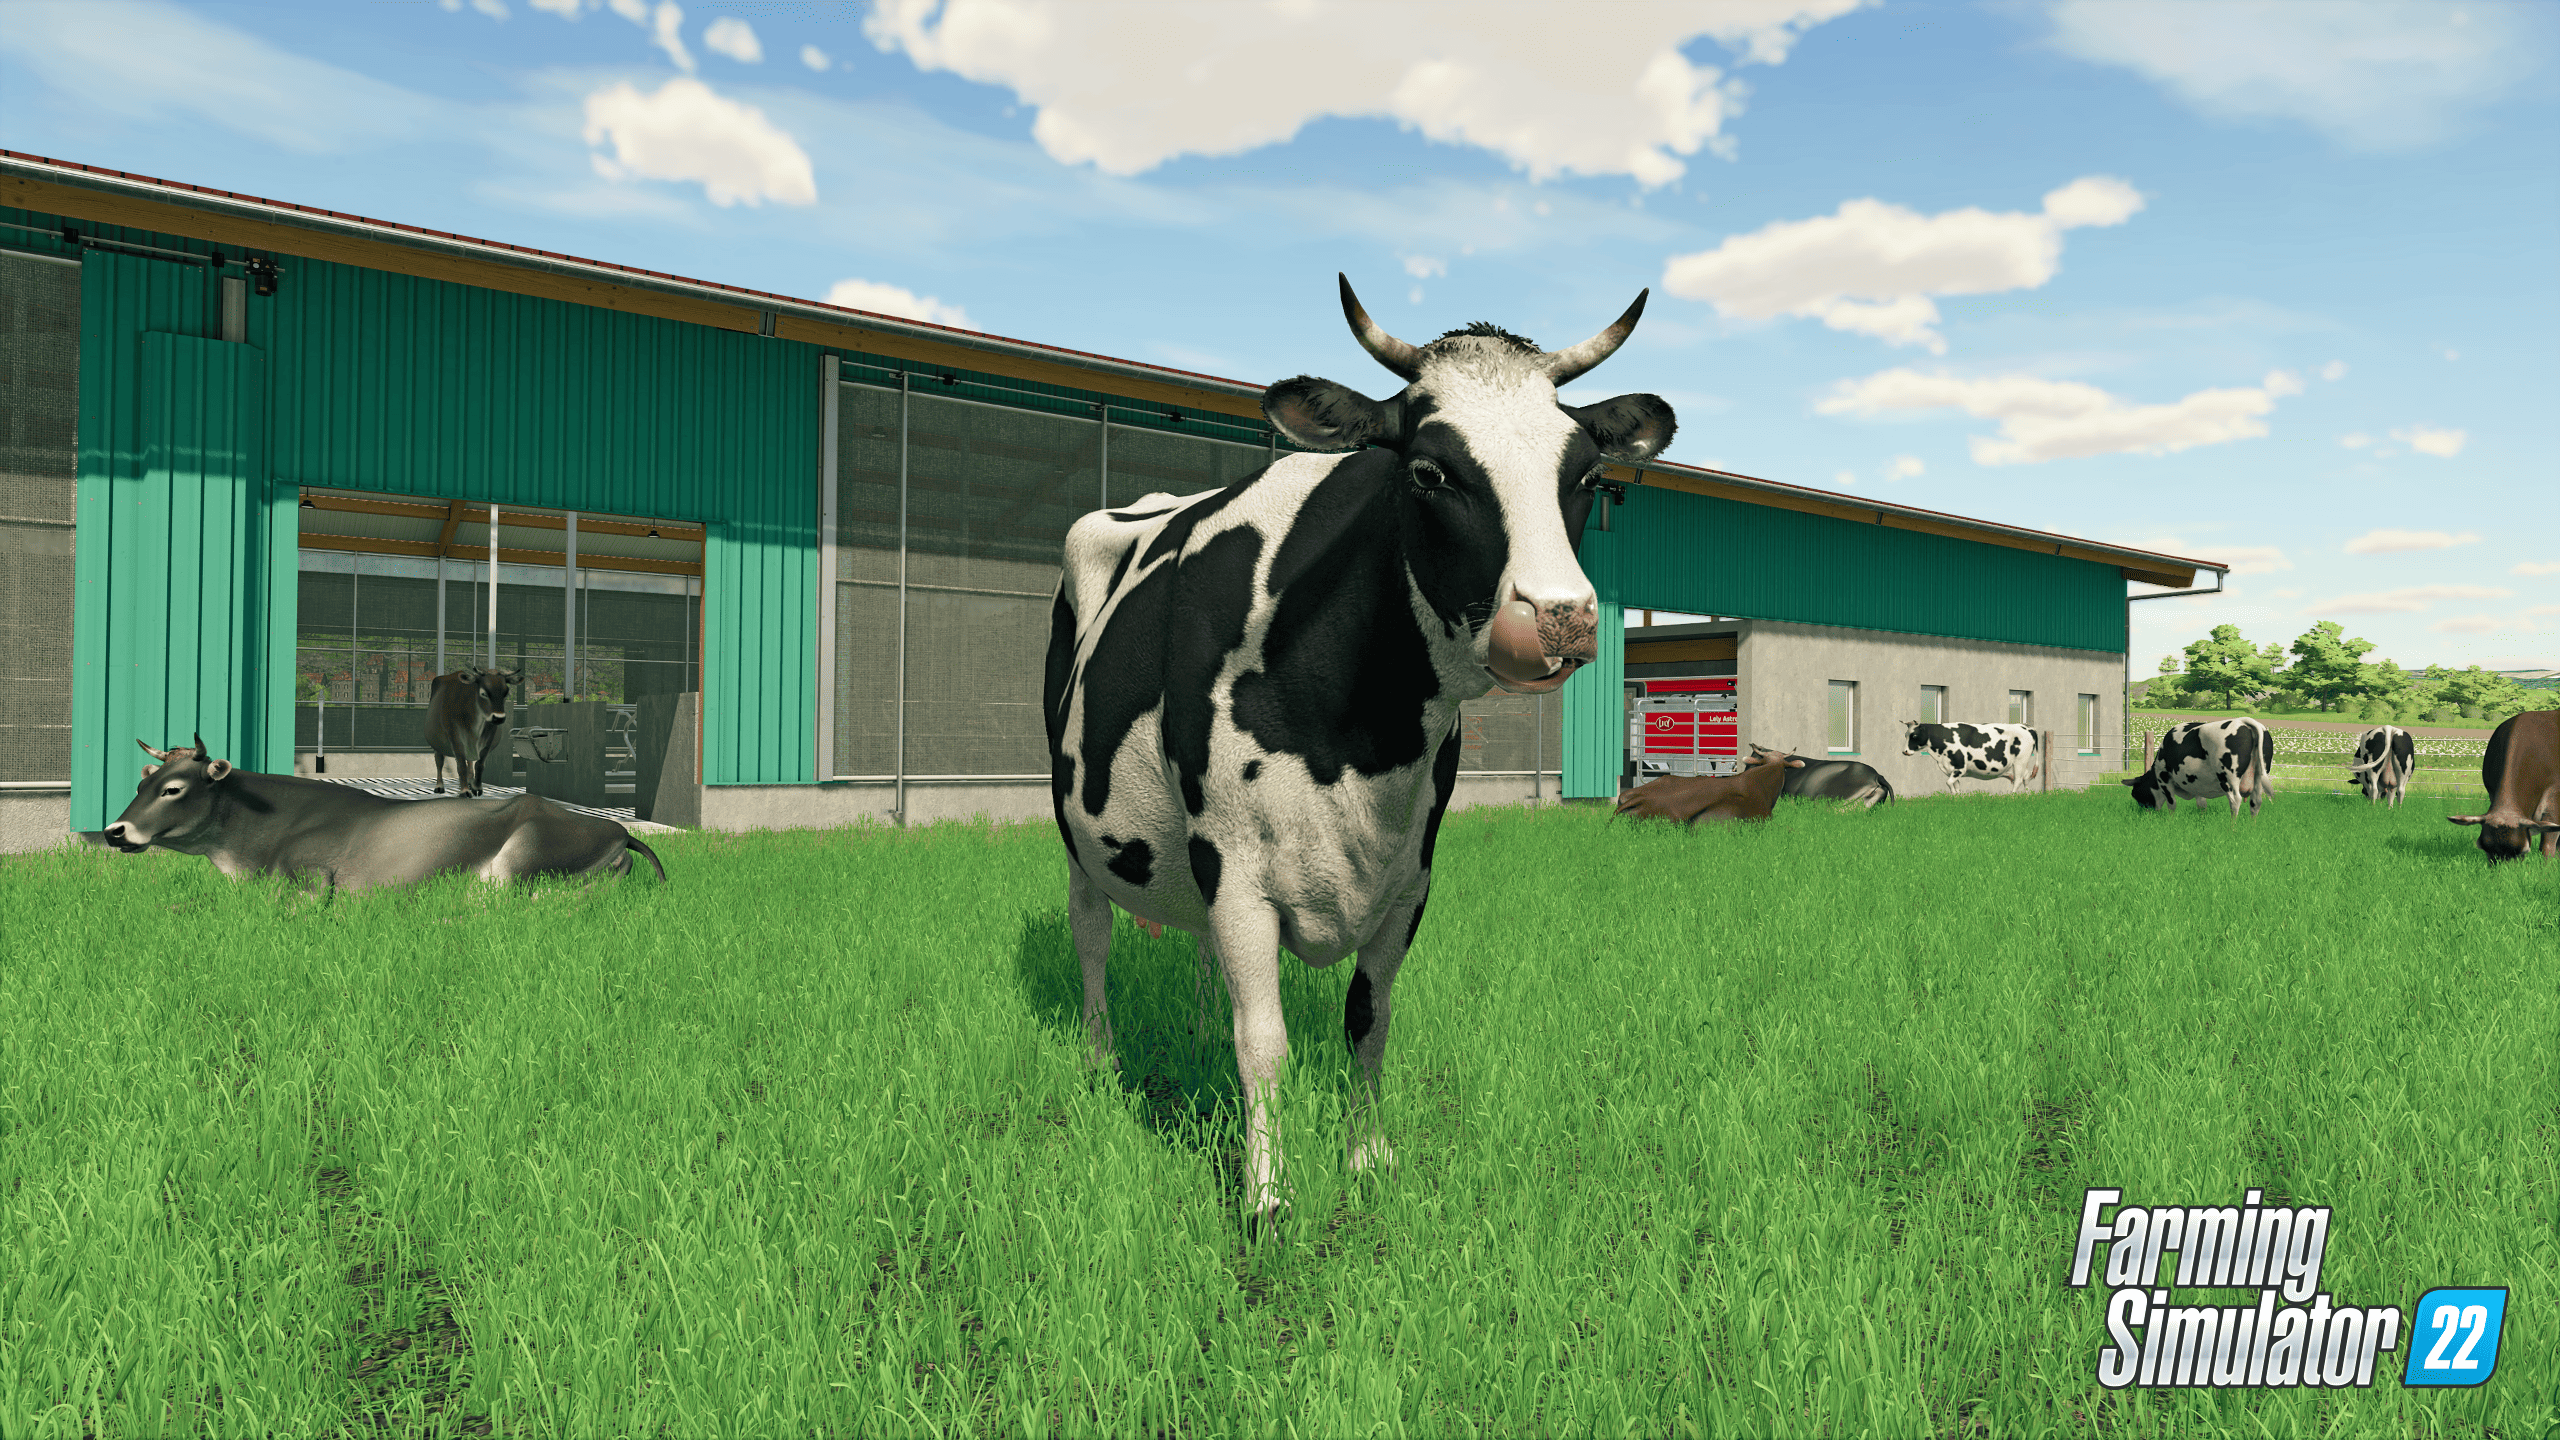 10 Farming Simulator 22 tips for beginners